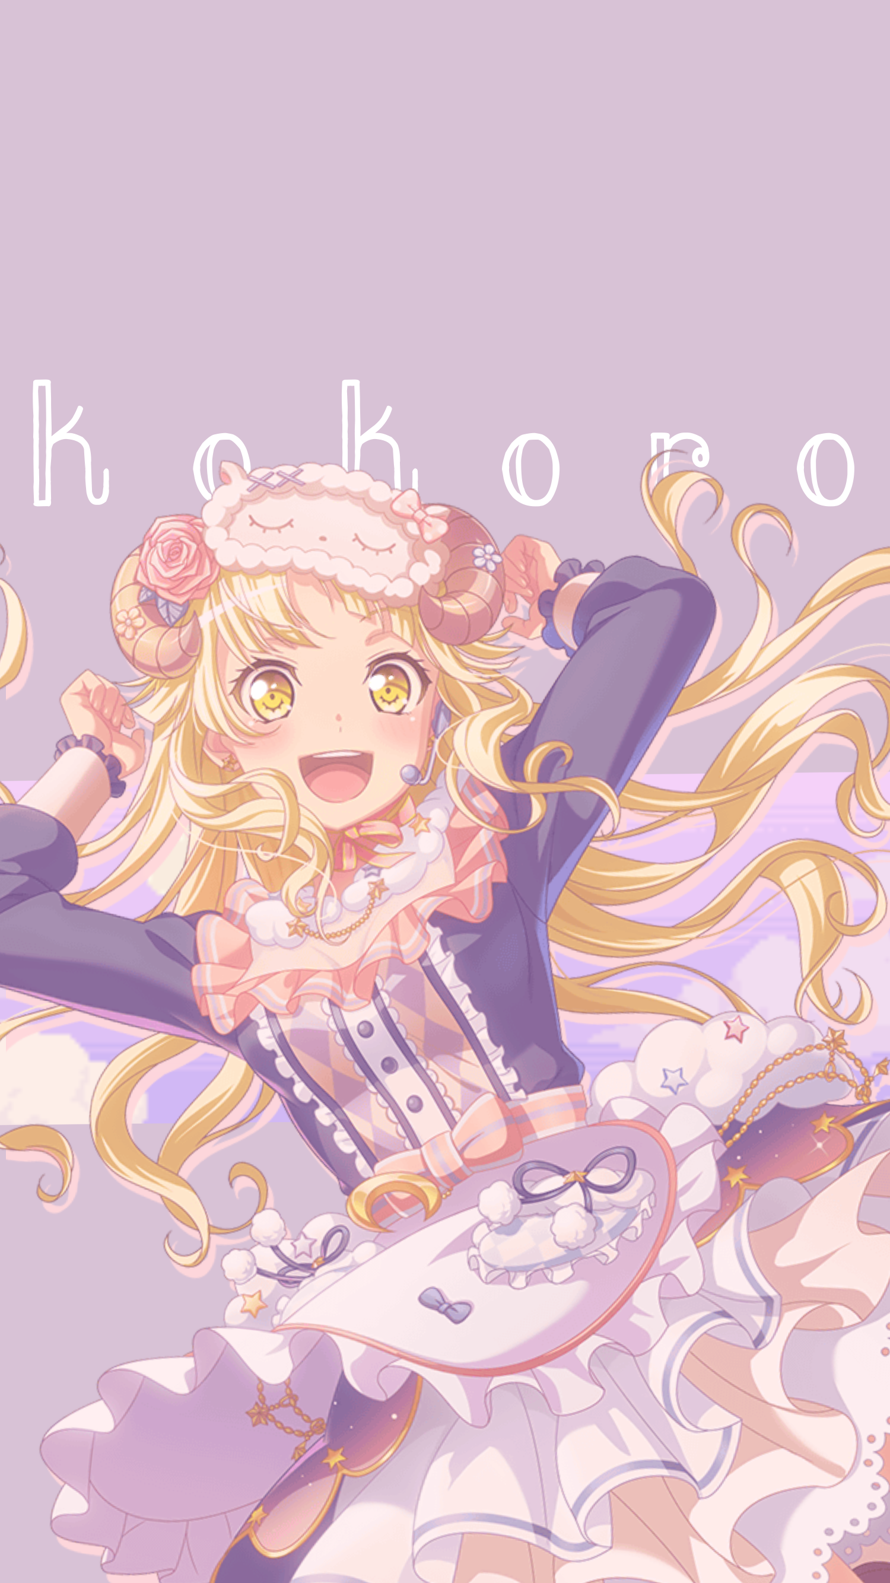   Happy Birthday Kokoro!  

I made a simple wallpaper edit to celebrate!
~Haha since I was too...